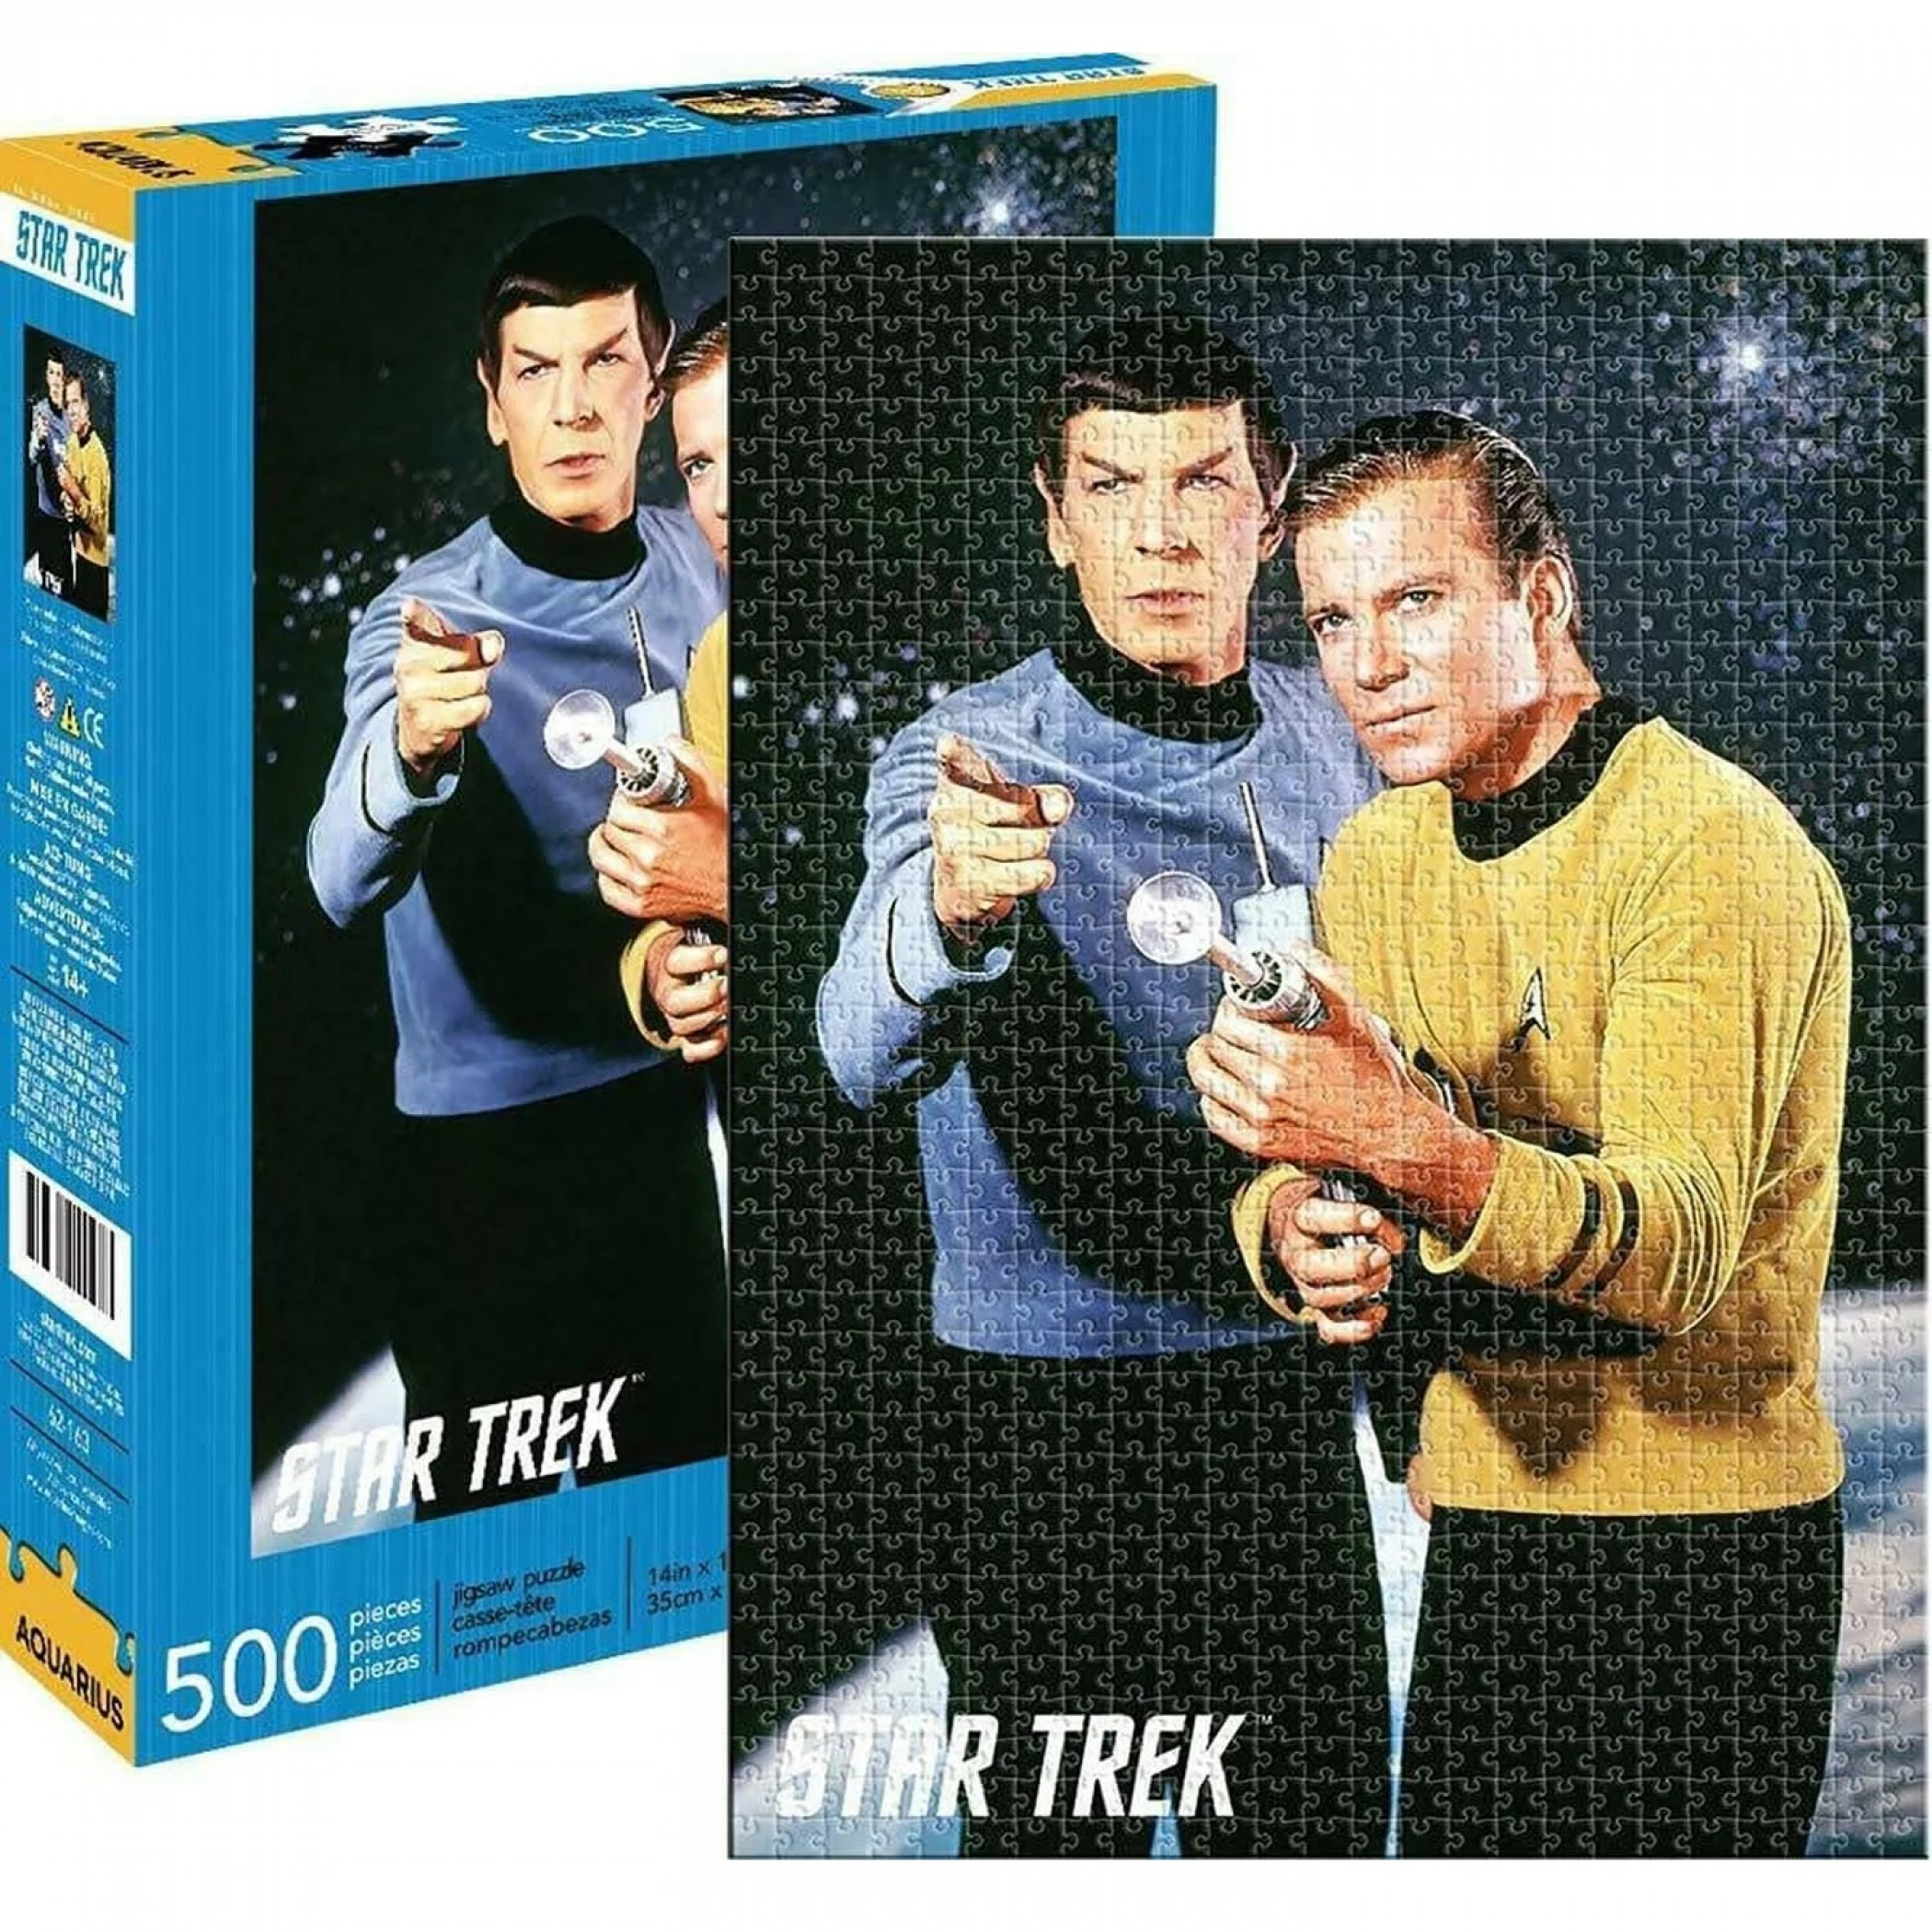 Star Trek Spock and Kirk 500 Piece Jigsaw Puzzle